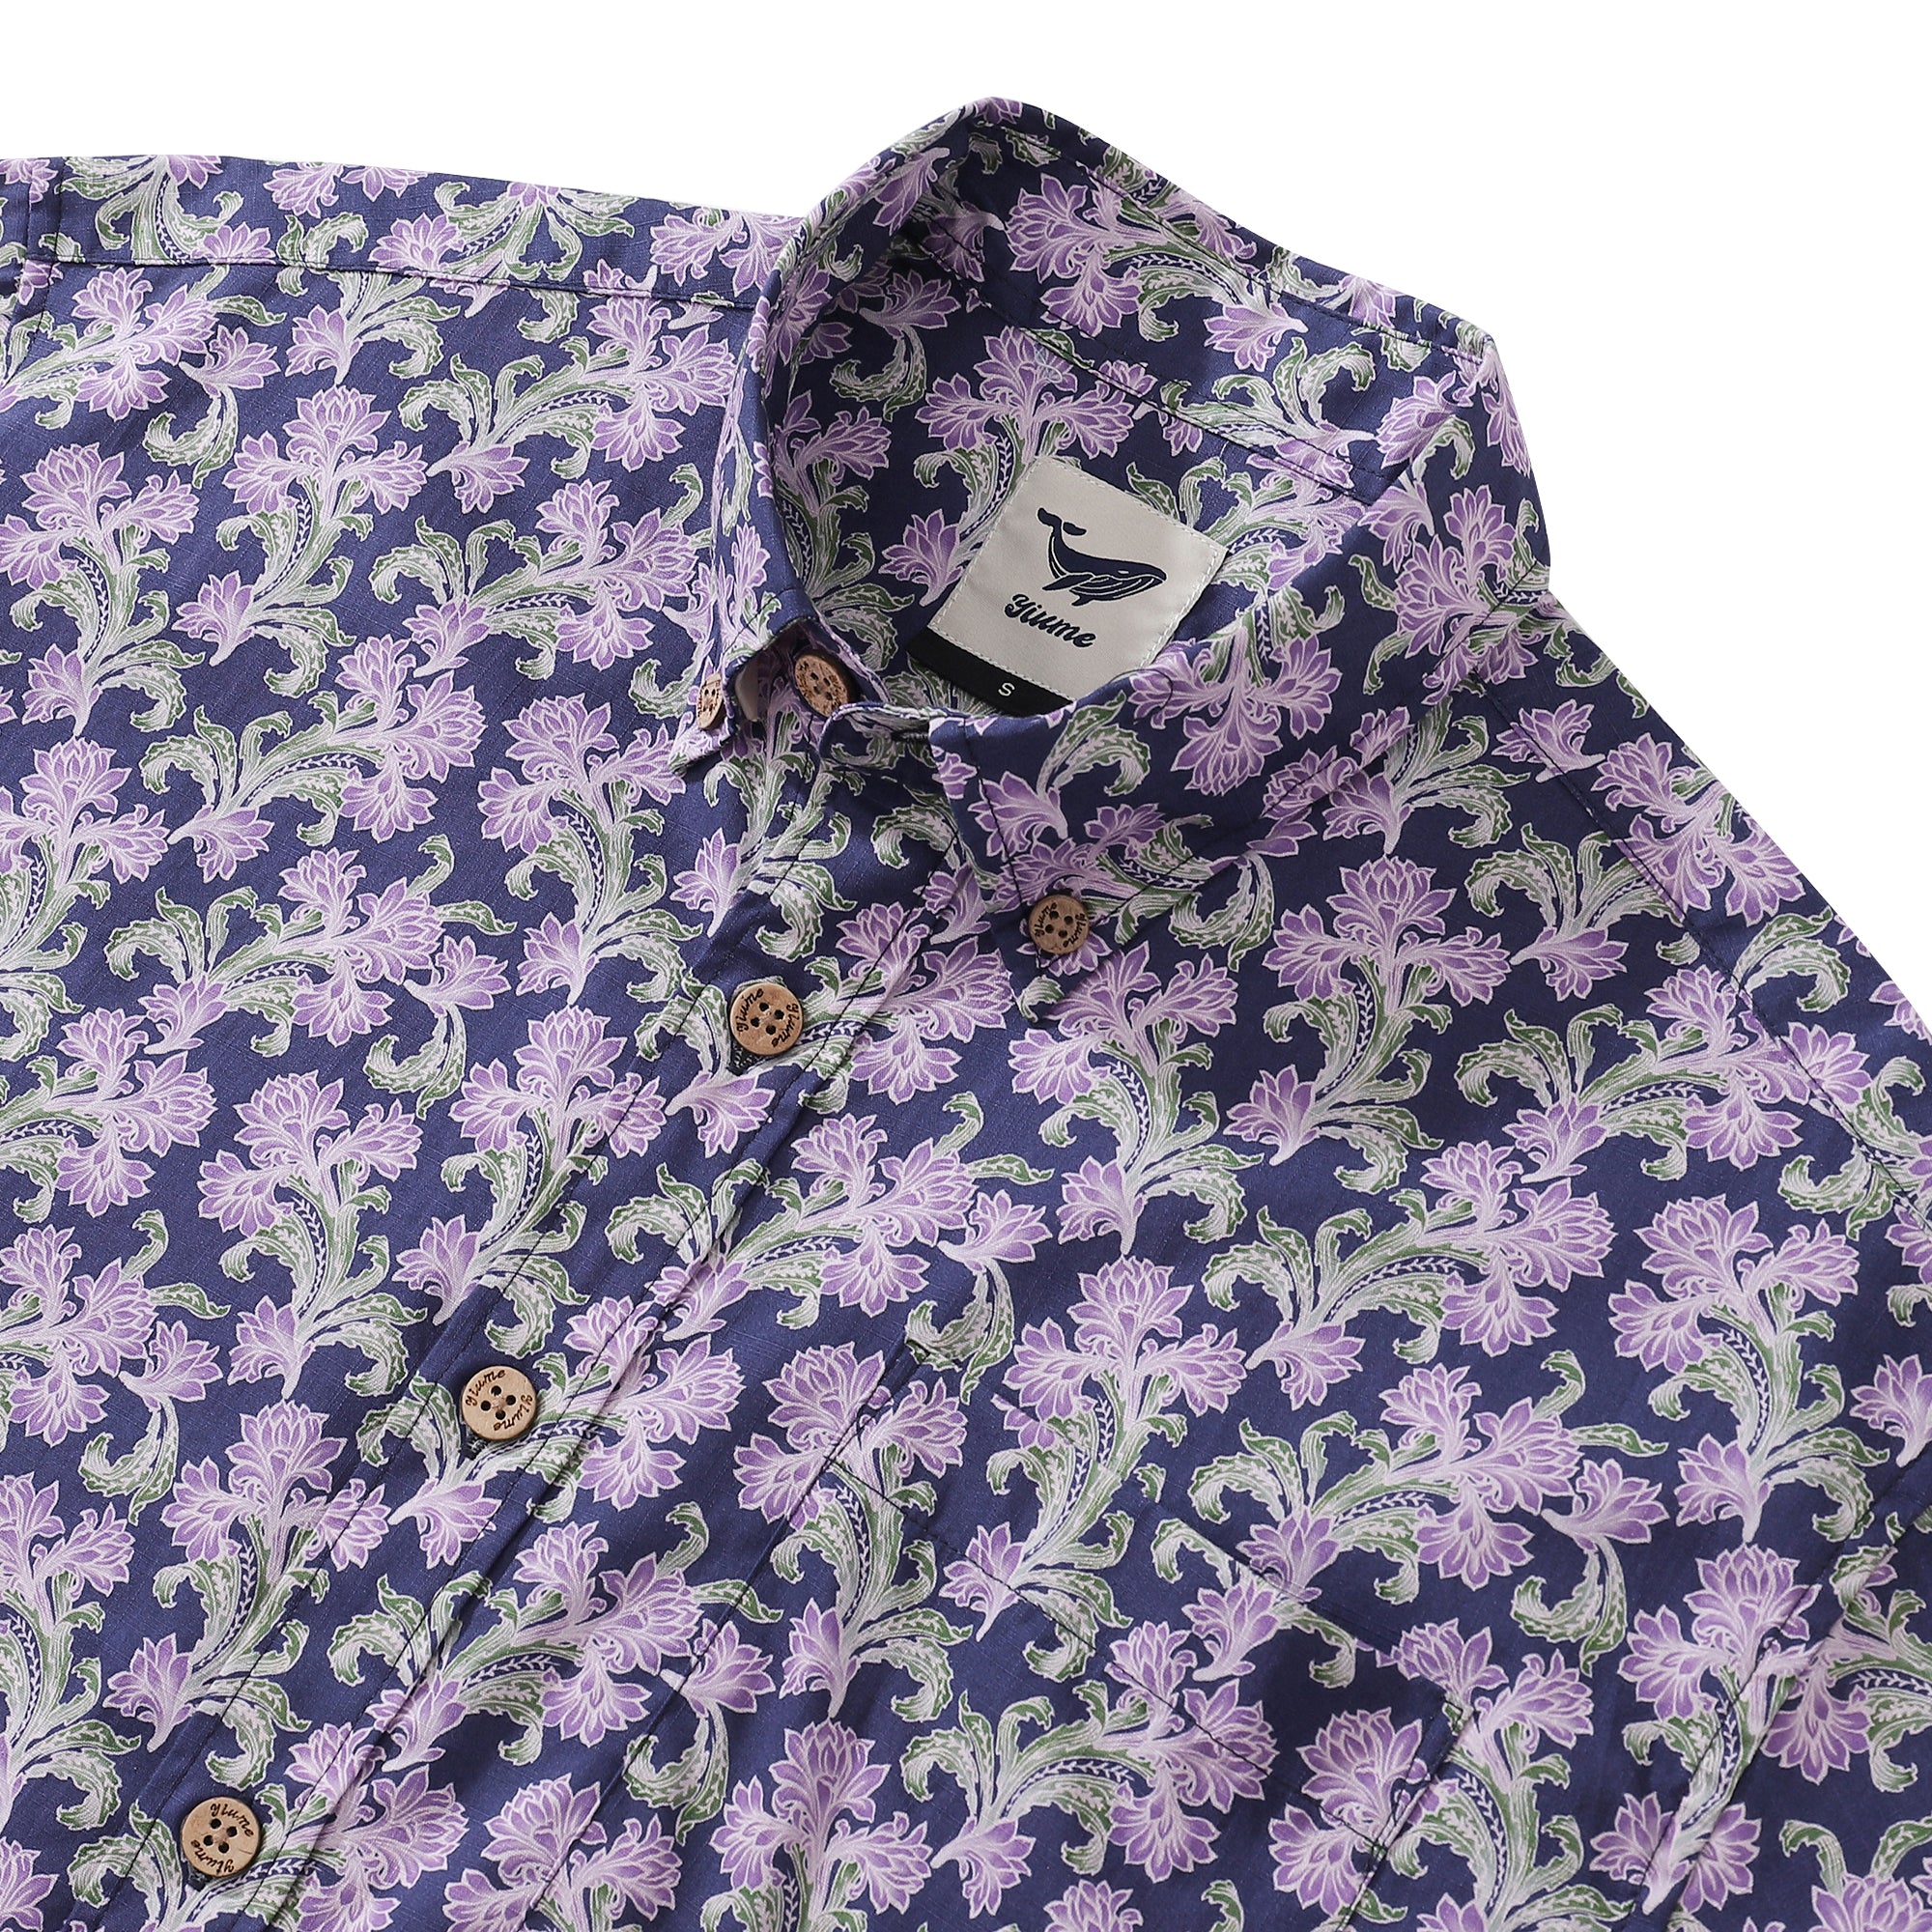 Men's Button Down Morris Shirt Purple Floral Cotton Aloha Shirt Hawaiian Shirt